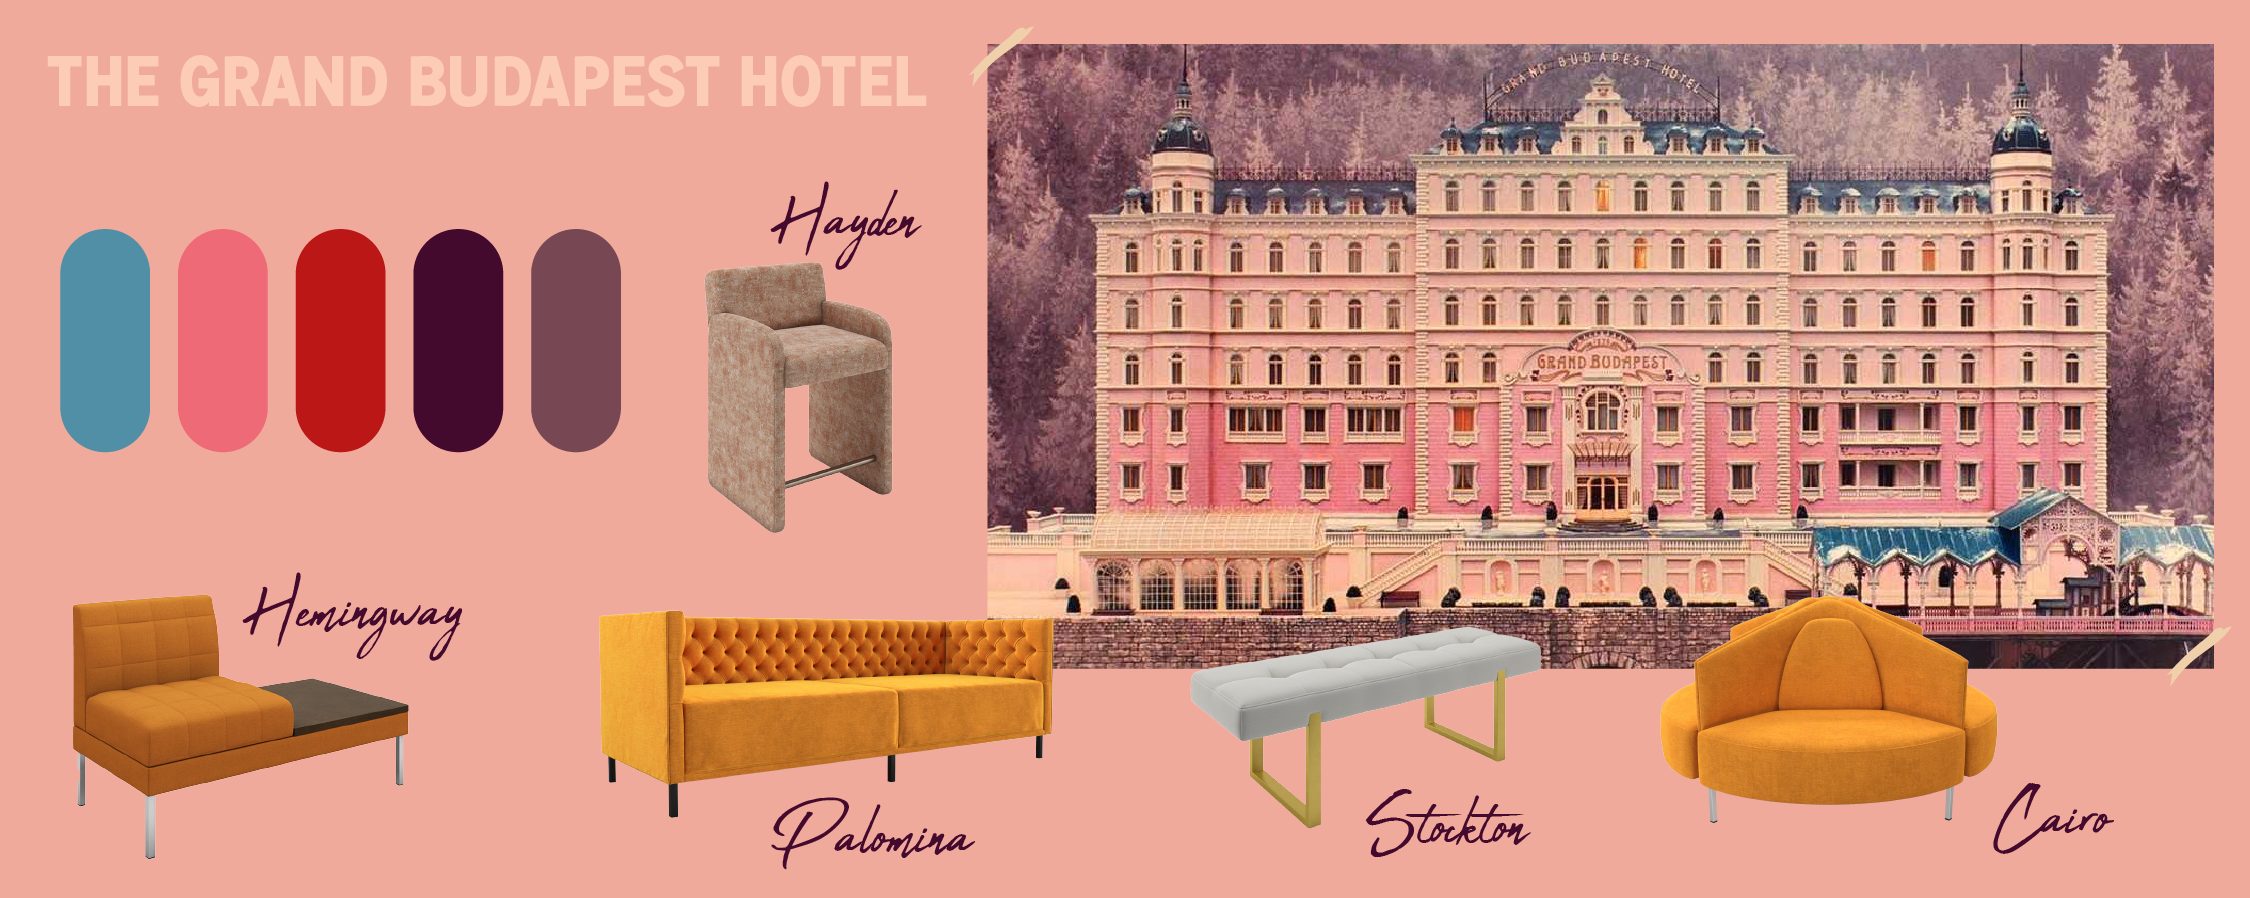 furniture interior design of grand budapest hotel